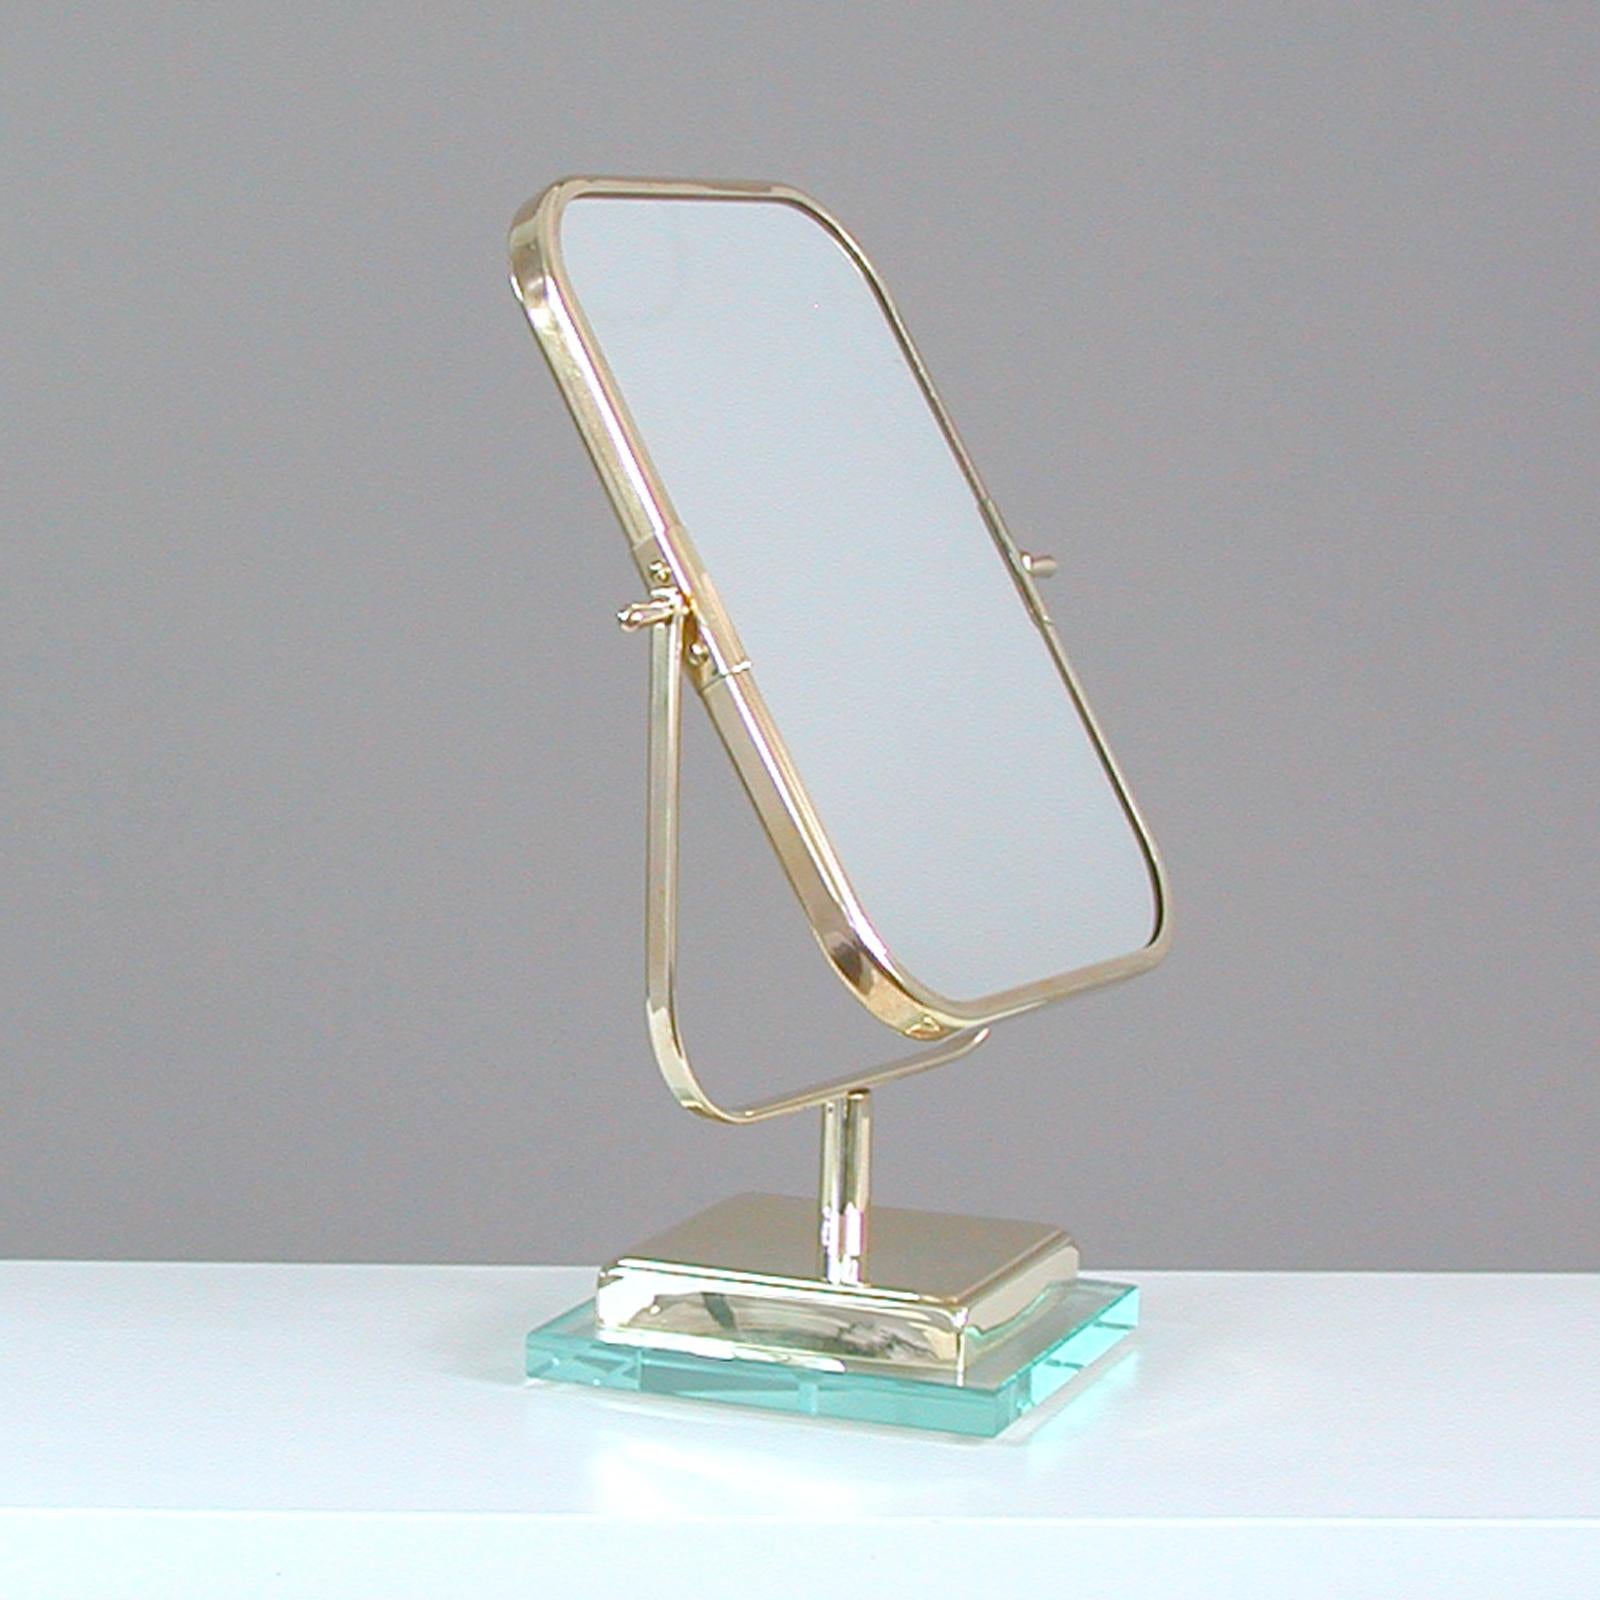 Mid-Century Modern Italian Brass and Glass Double Sided Table Mirror 1950s, Fontana Arte Style